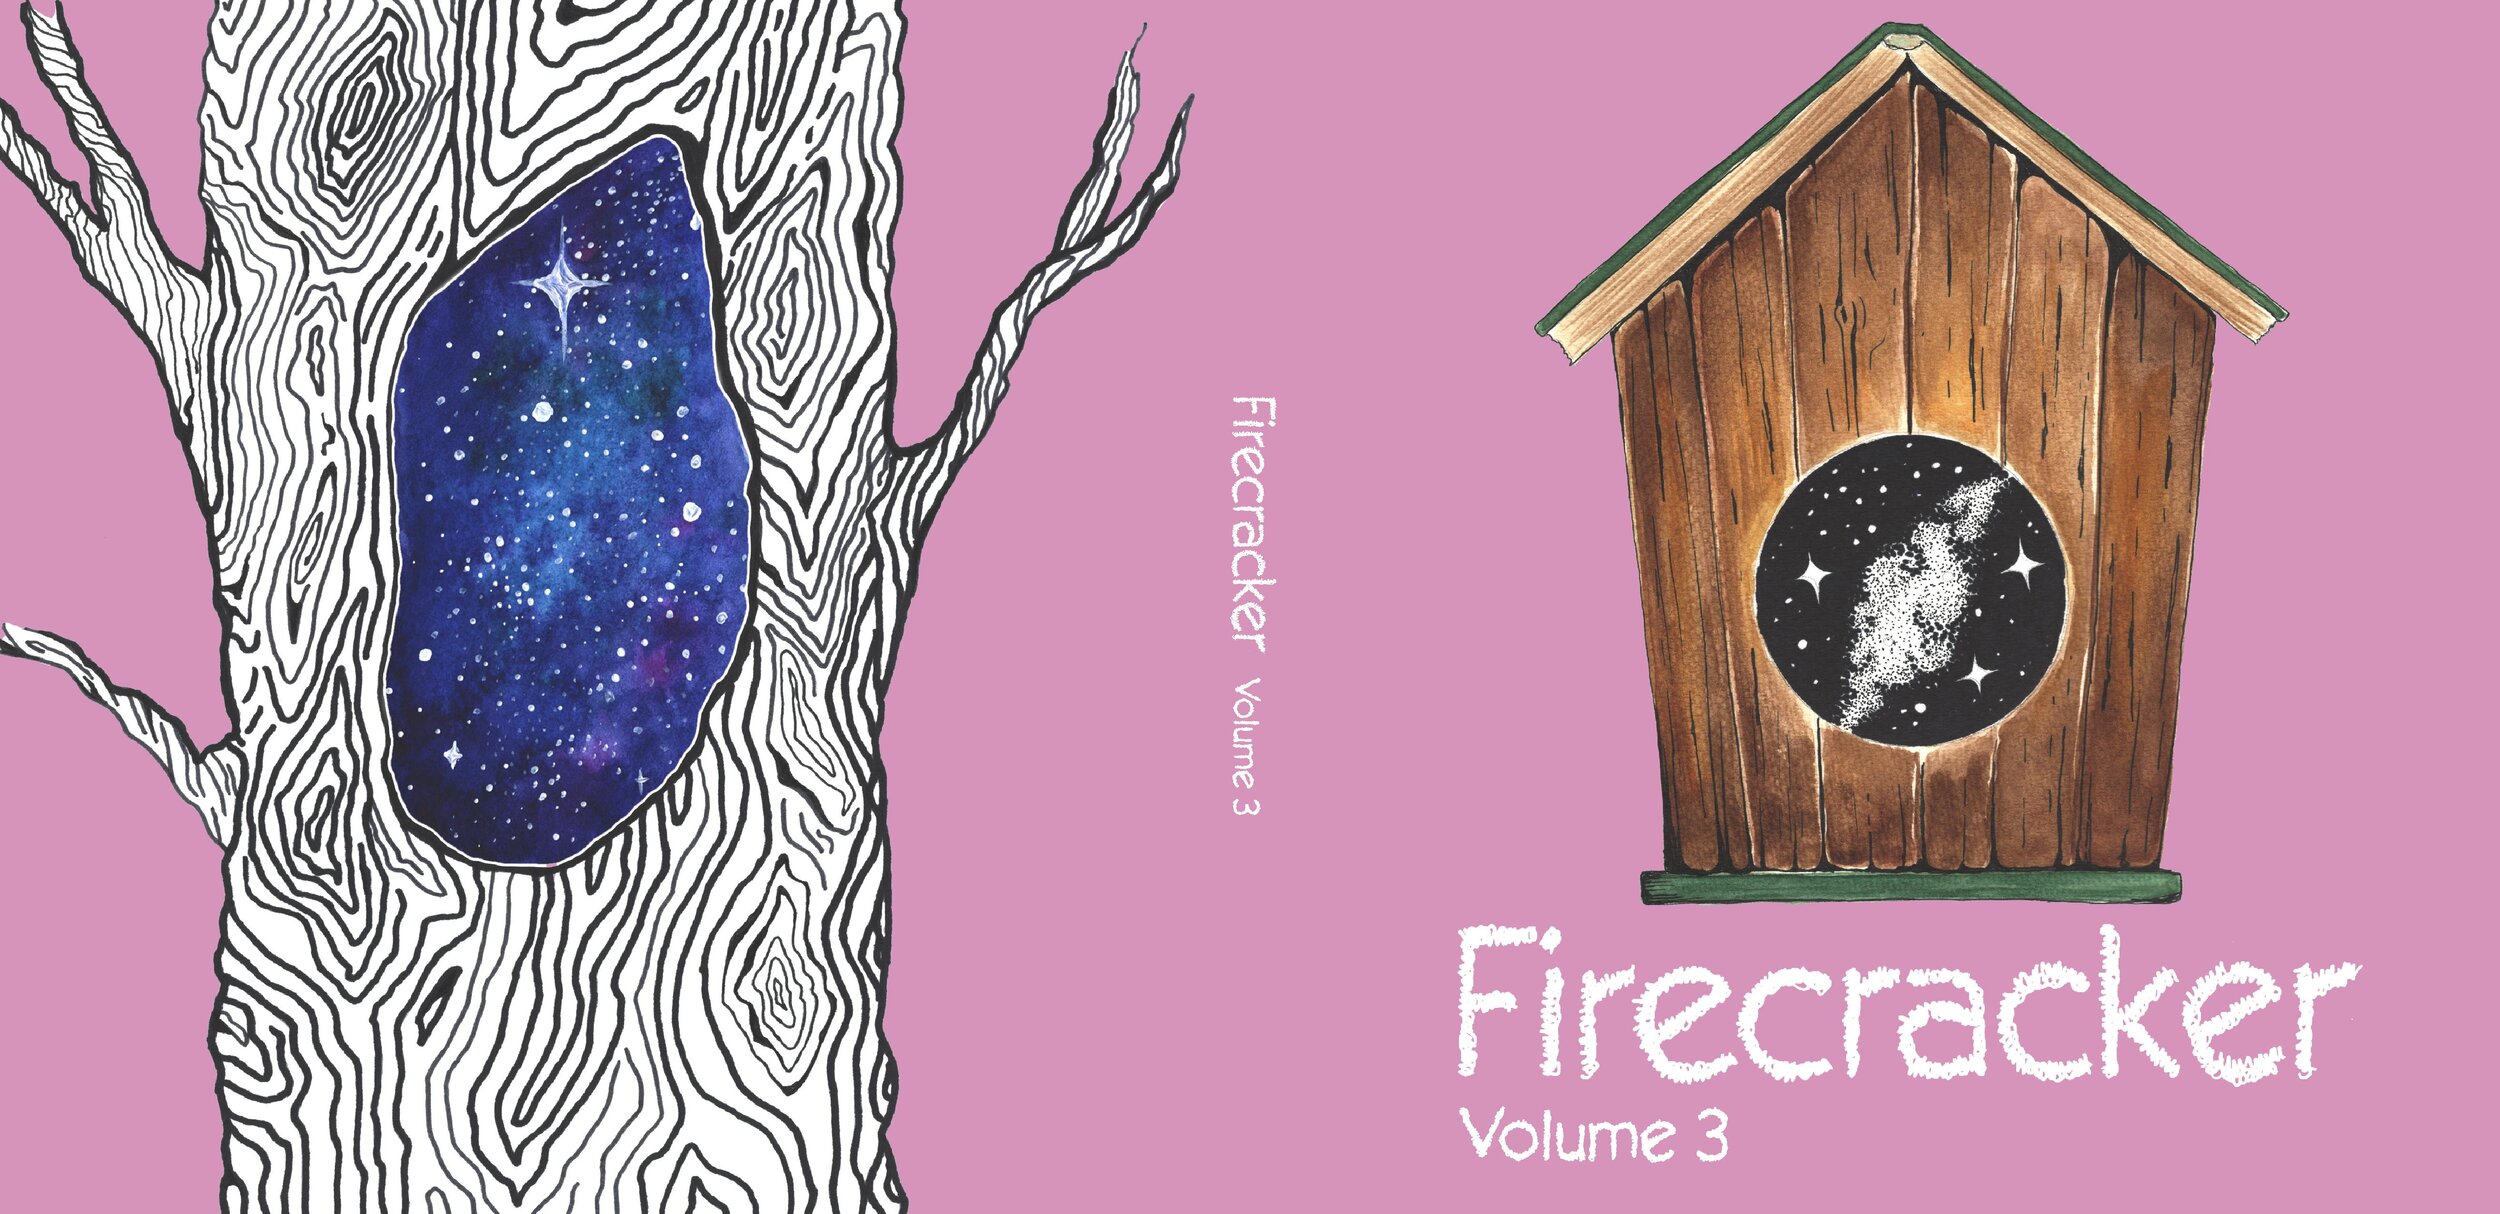 Firecracker Vol 3 - 2020-page-001.jpg